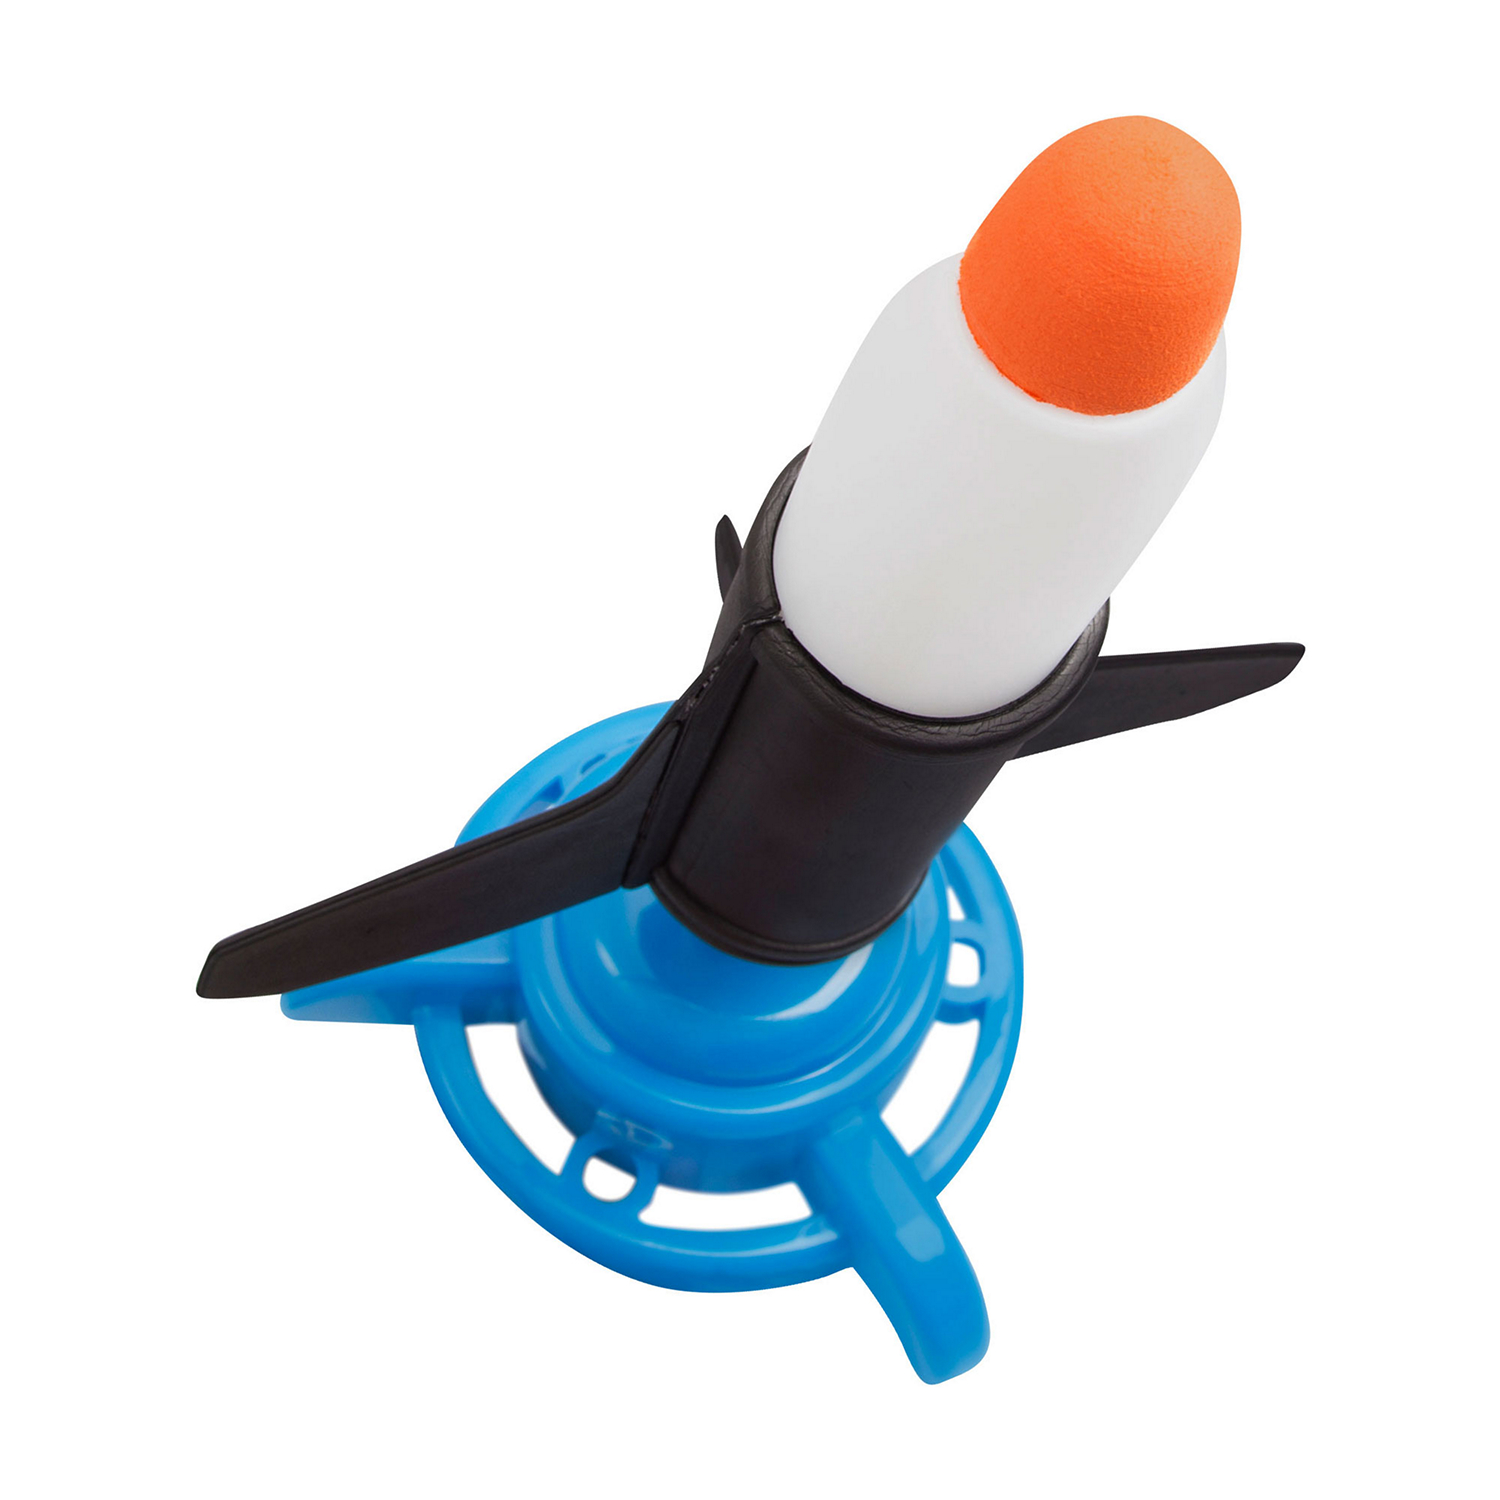 FAO Sc Toy Science Rocket